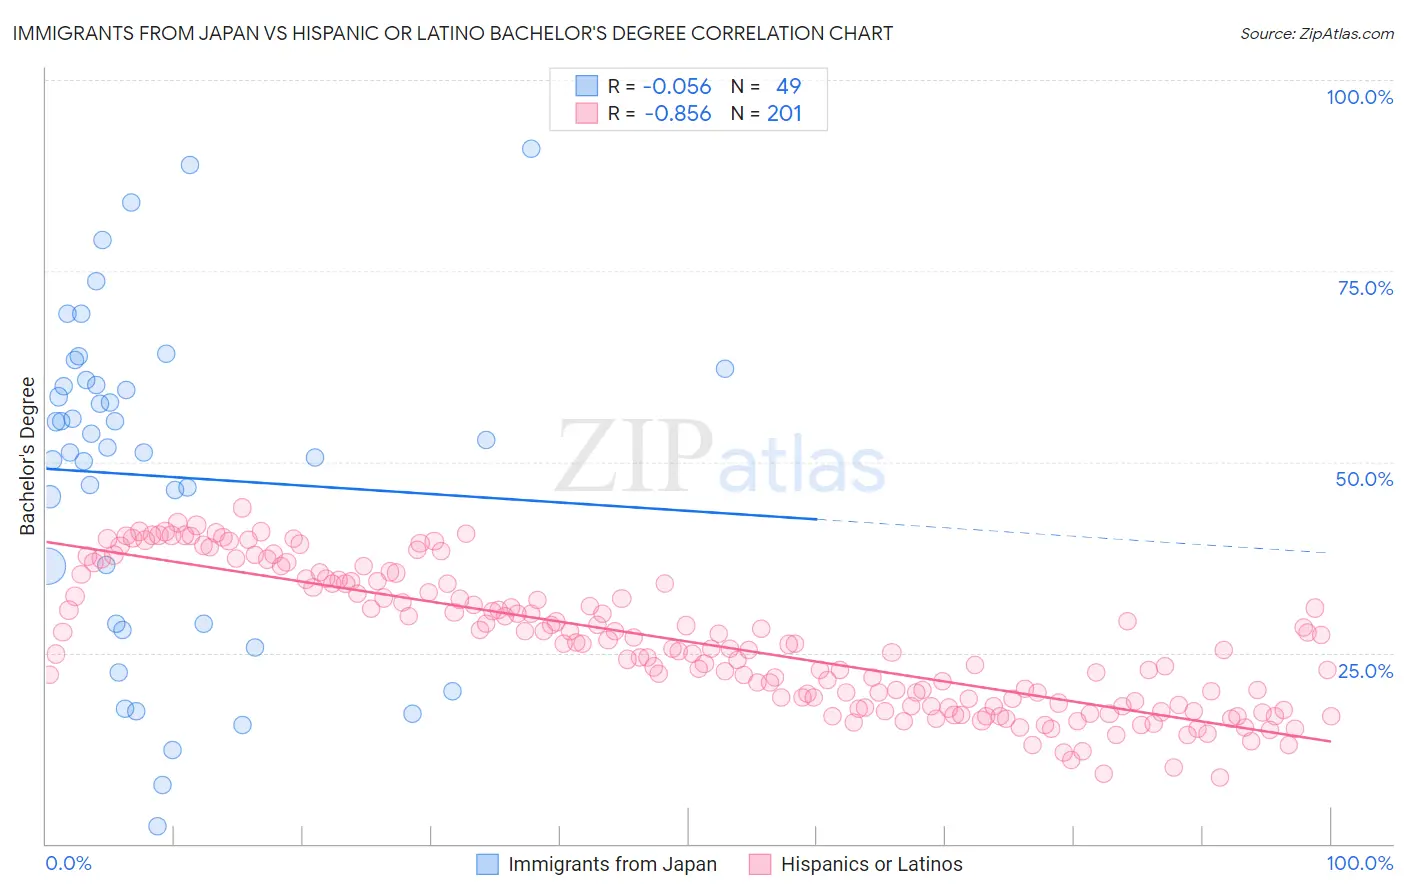 Immigrants from Japan vs Hispanic or Latino Bachelor's Degree